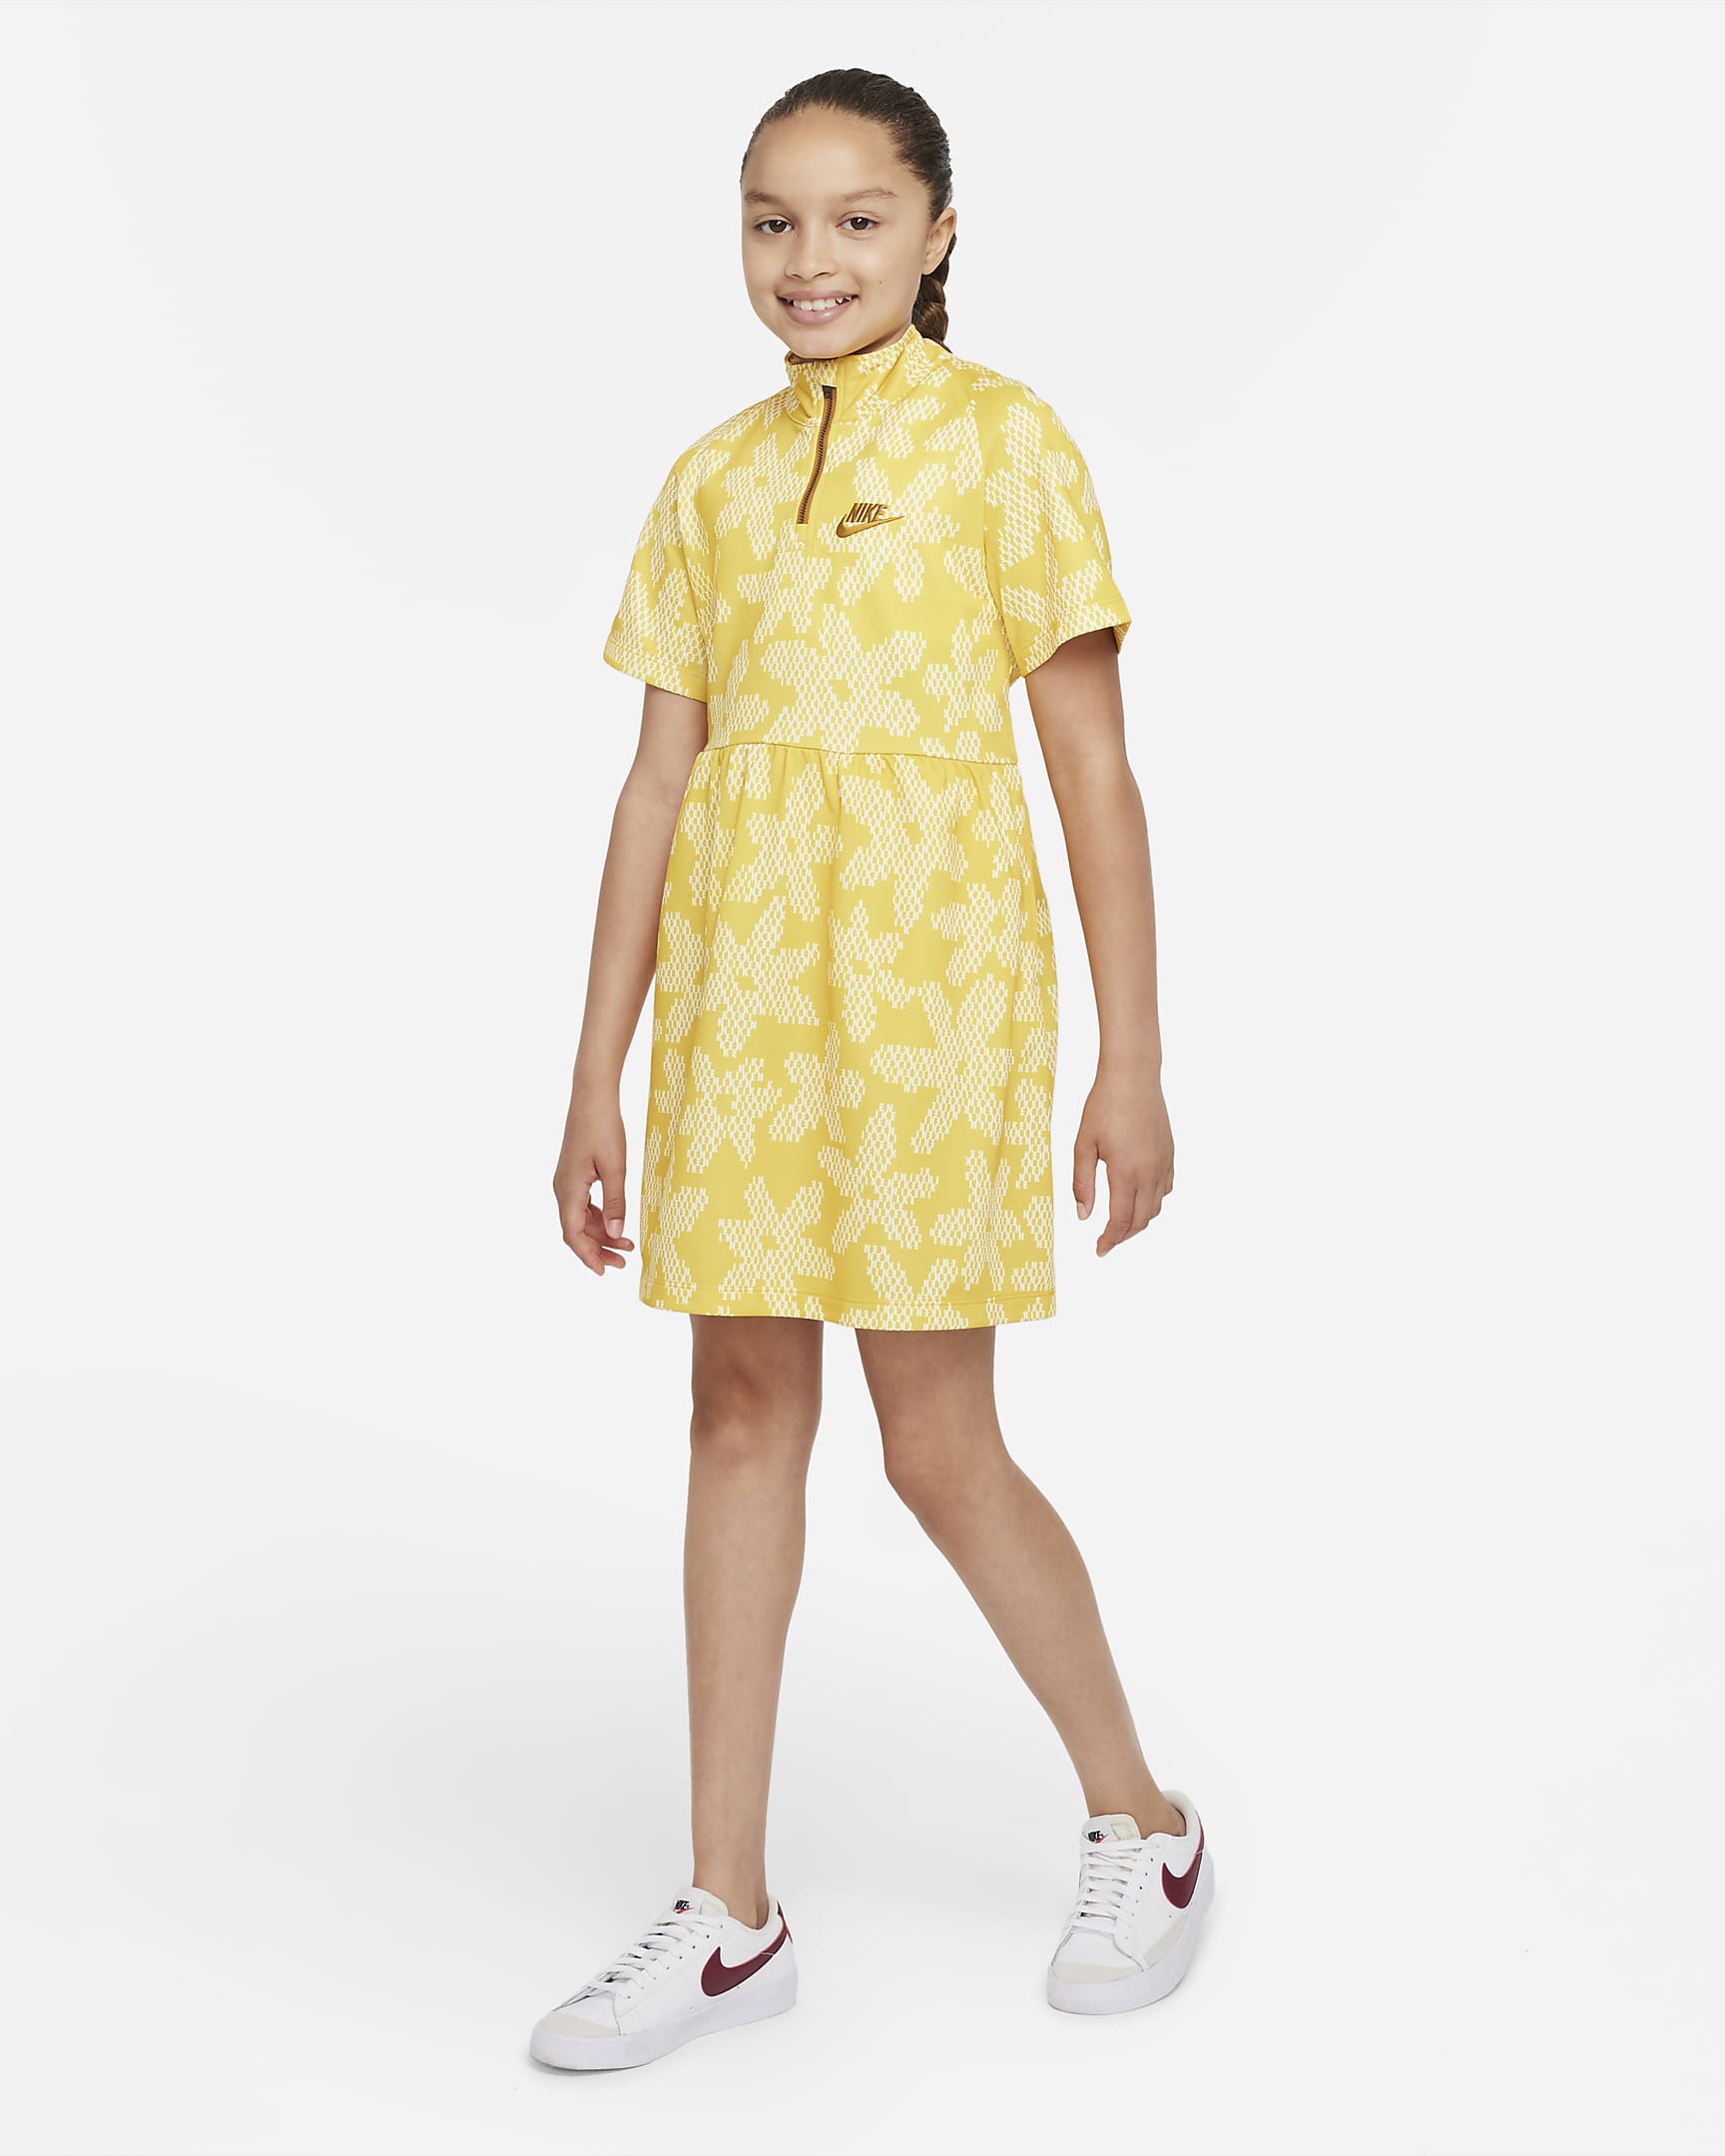 Nike Sportswear Big Kids' (Girls') Printed Short-Sleeve Dress. Nike.com